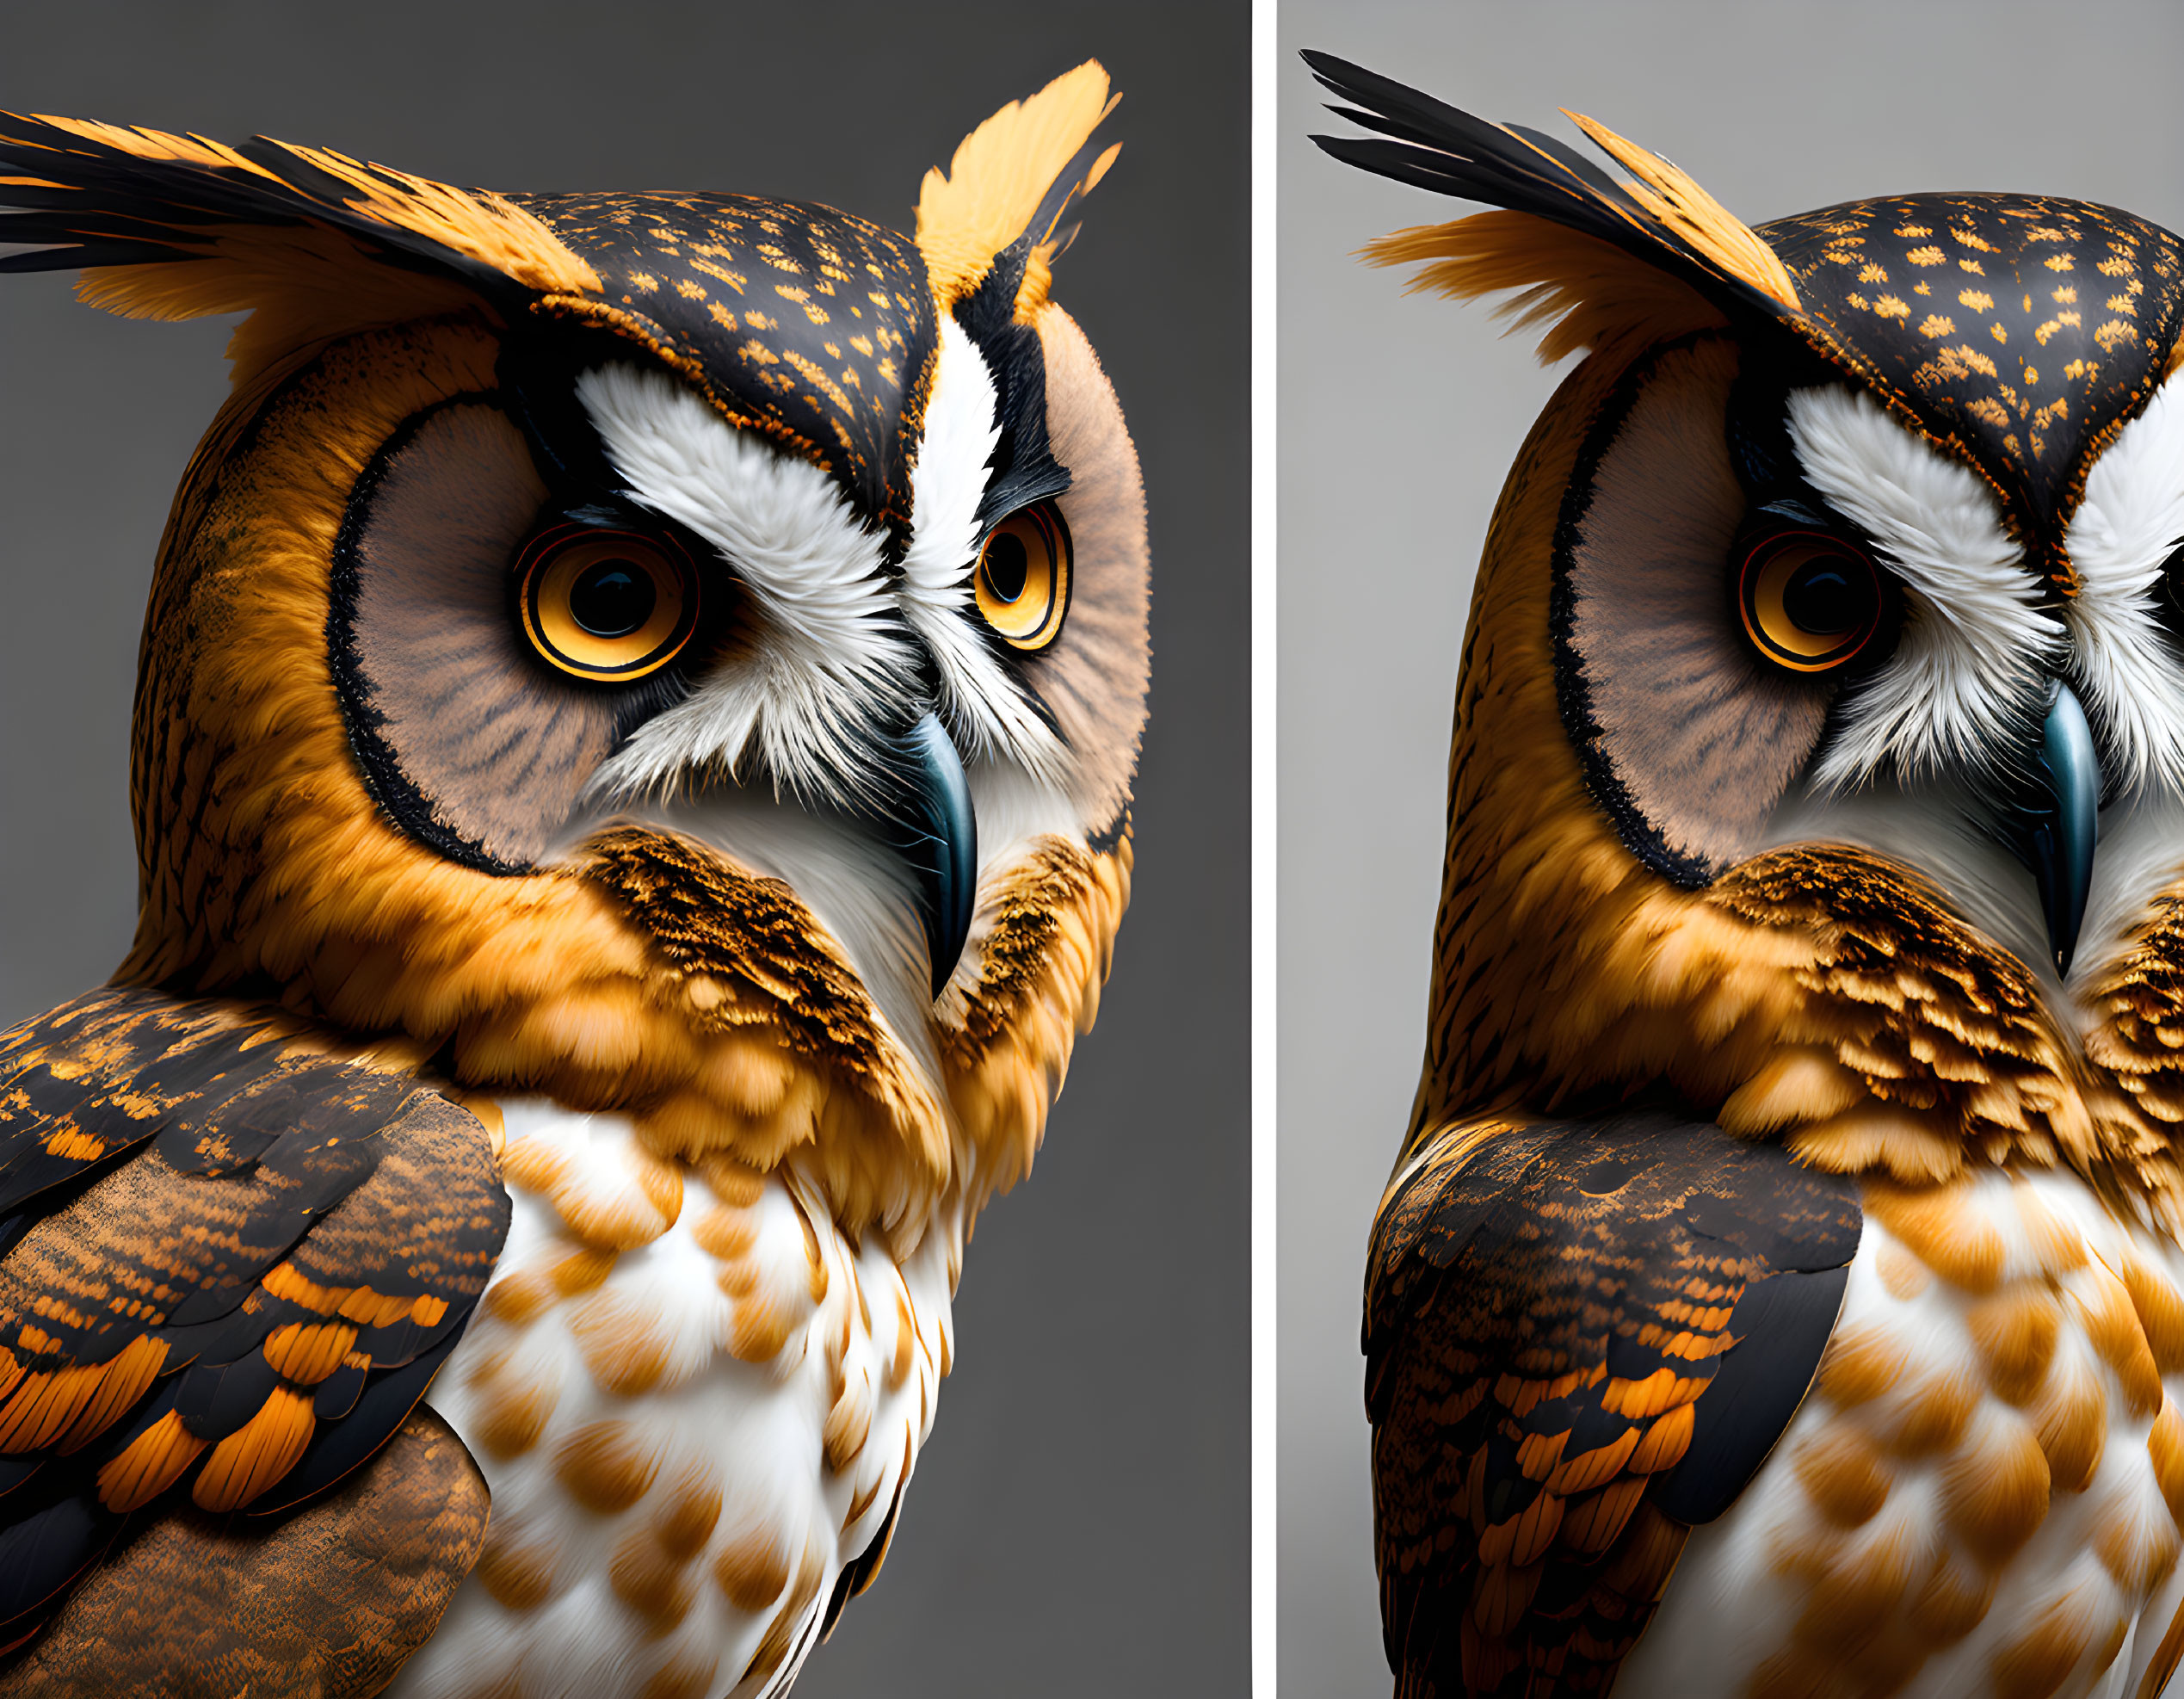 Portraits of an owl